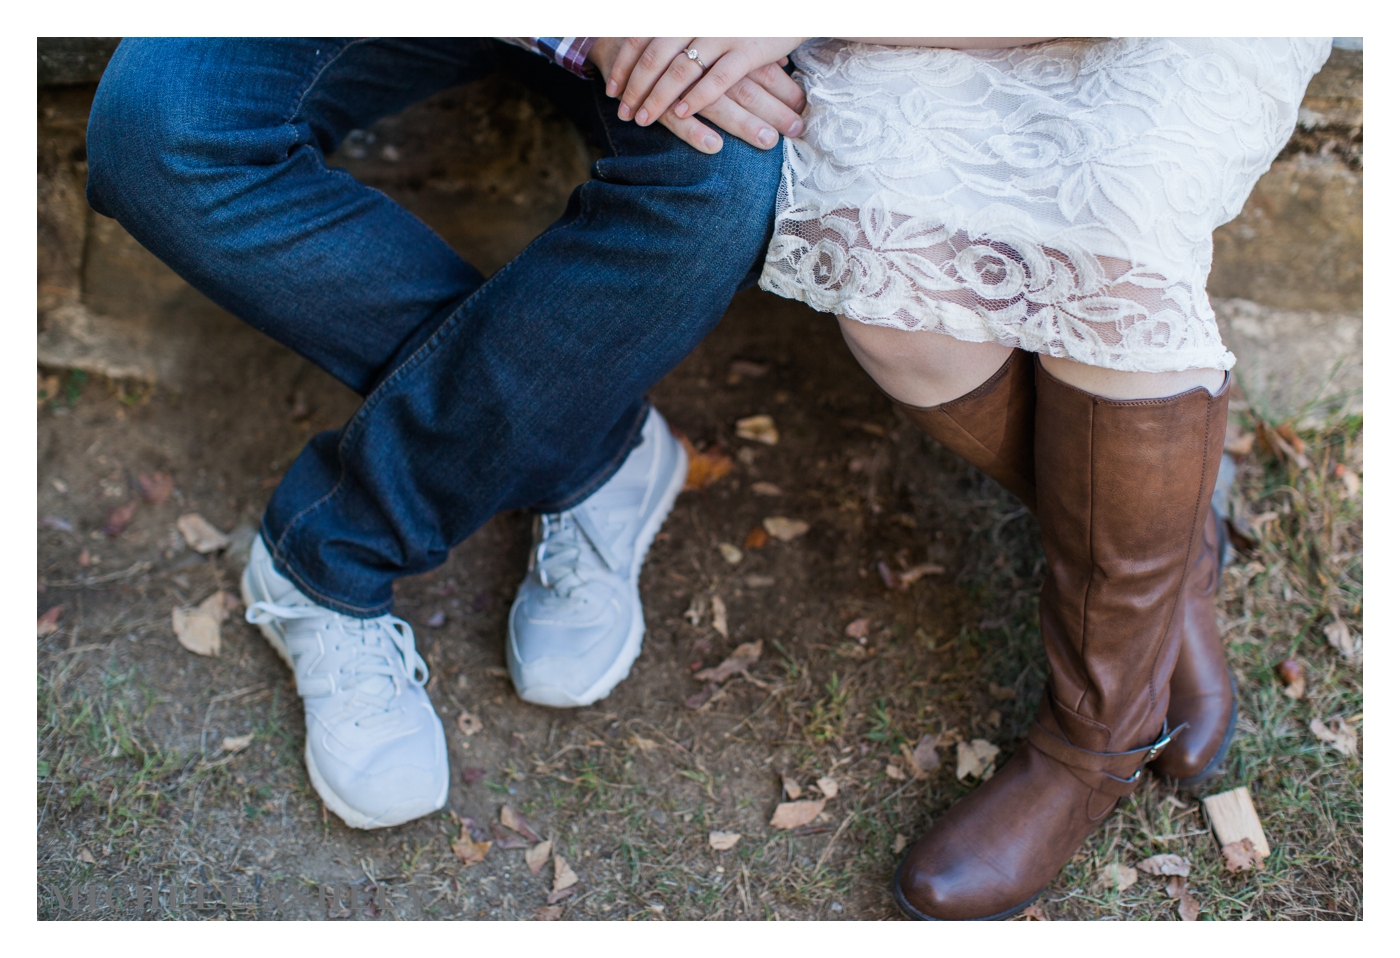 Autumn Engagement | Martin + Brittney | New England | Michele Ashley Photography